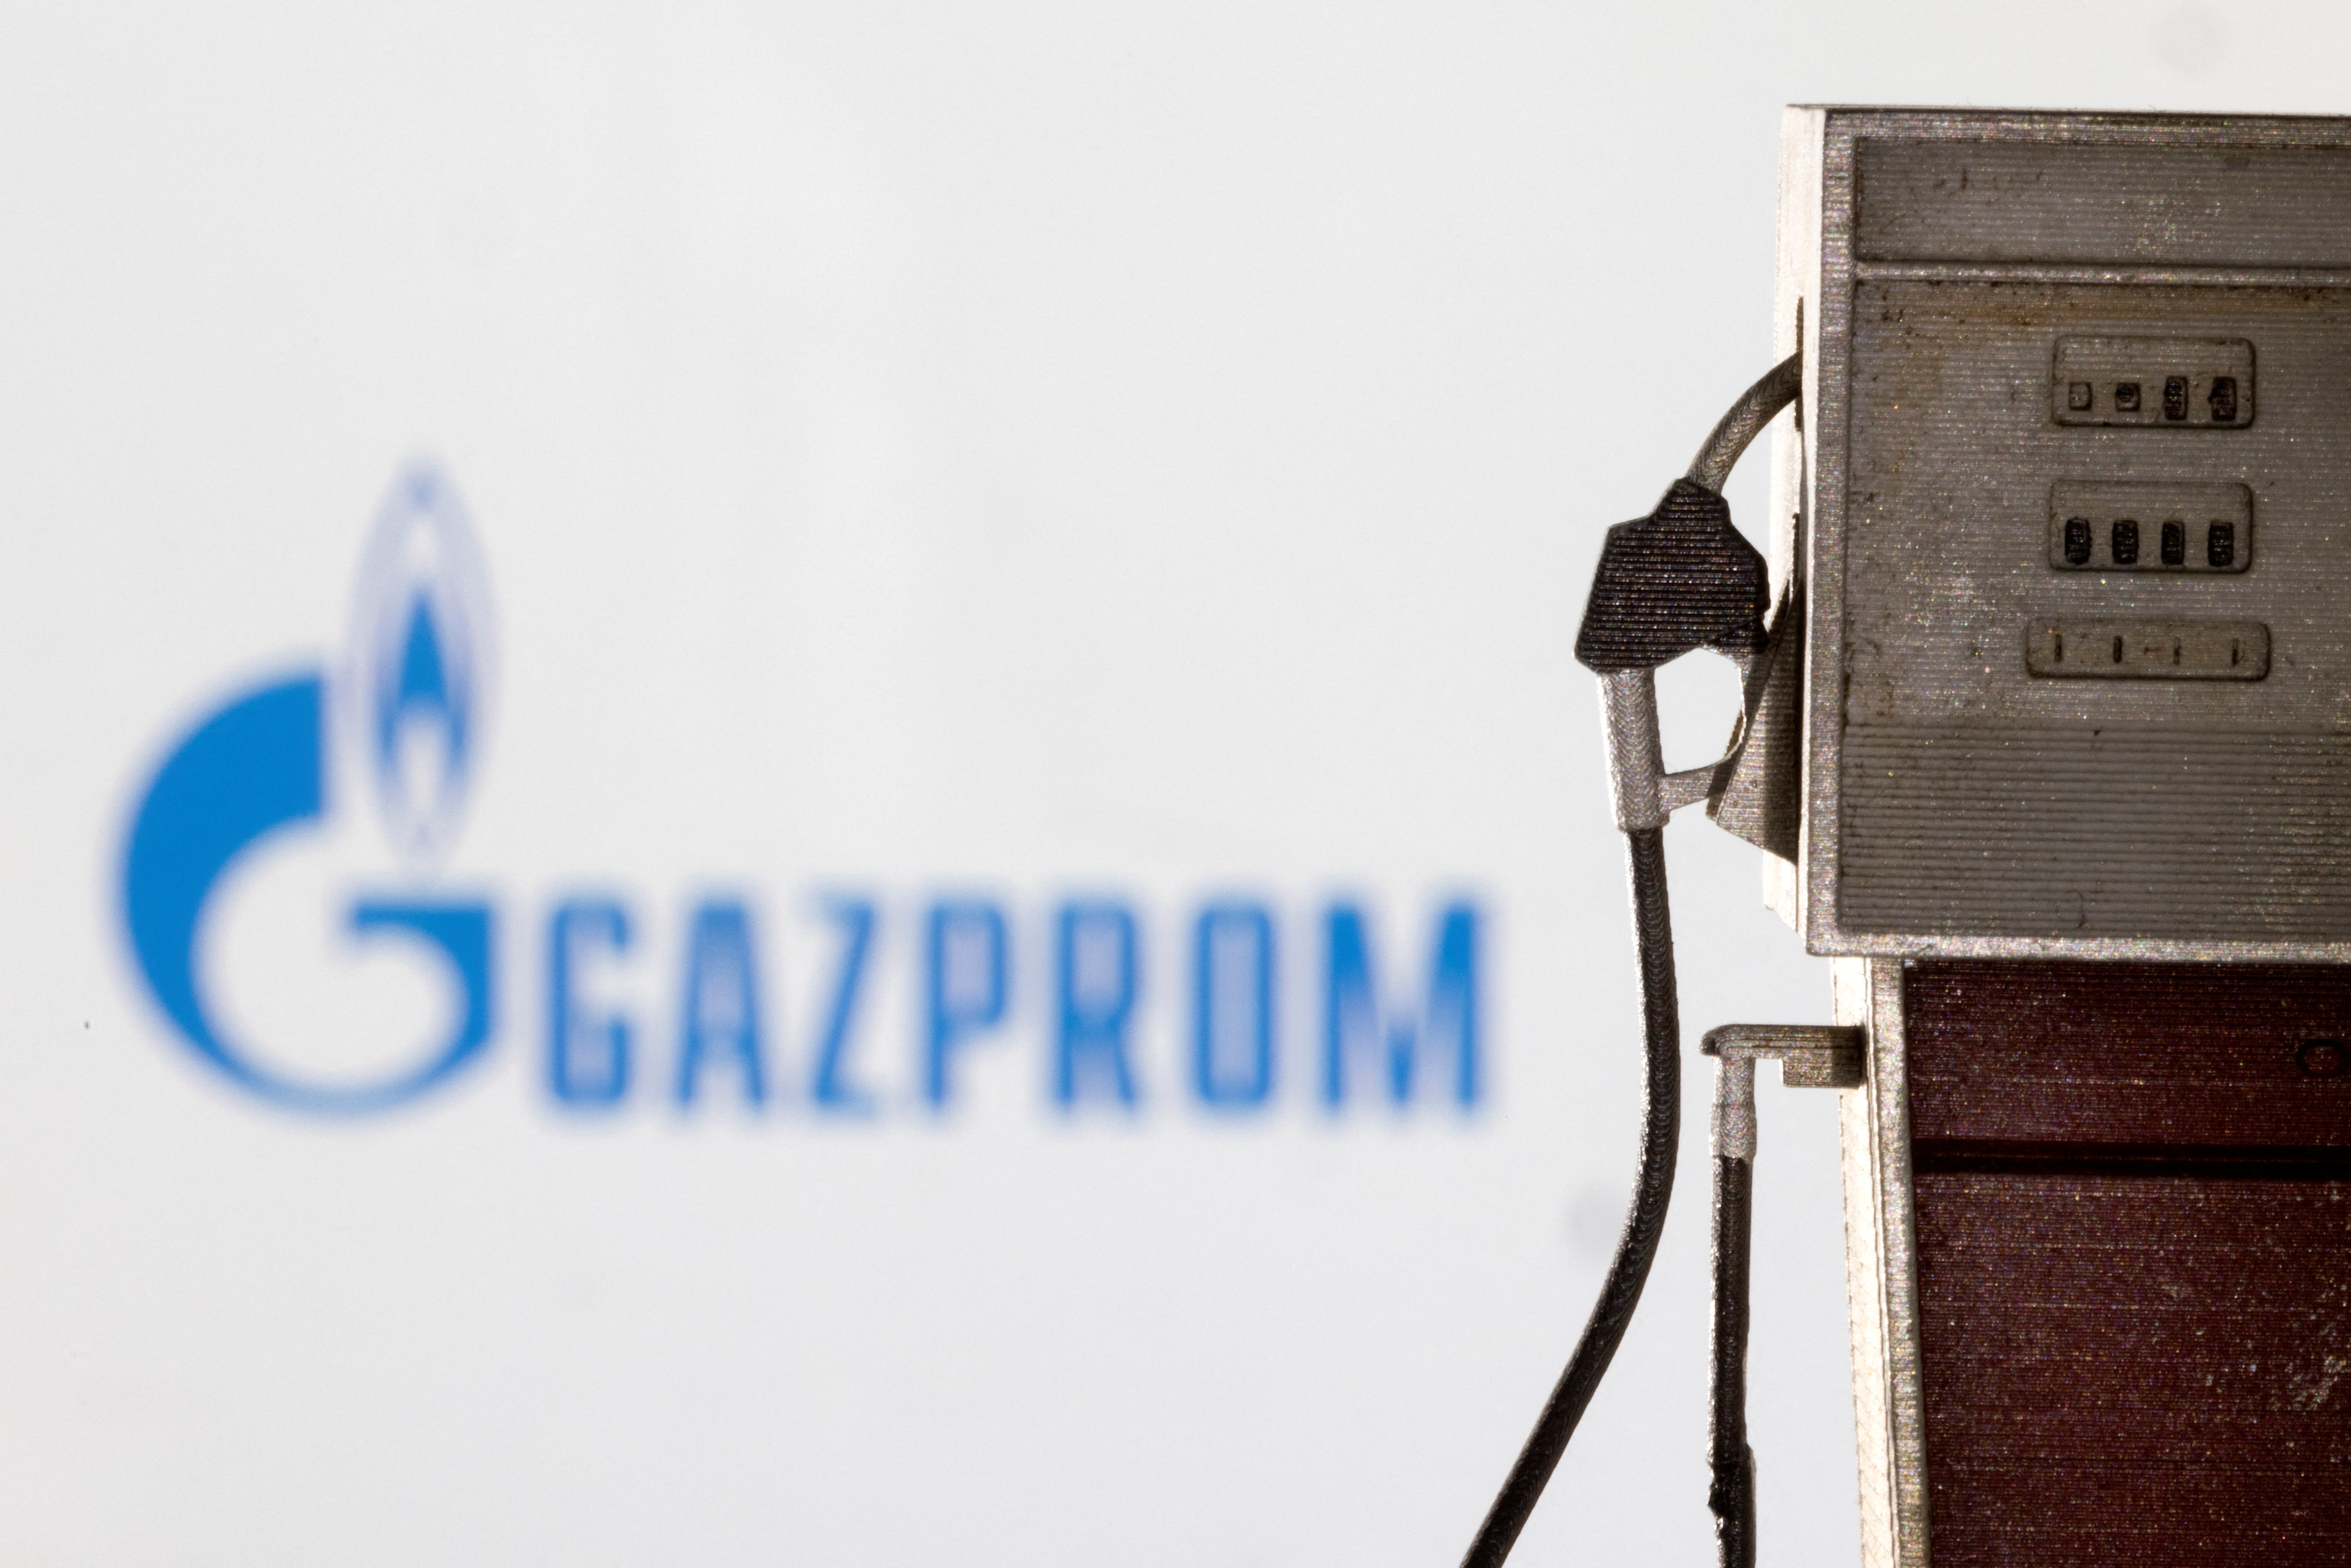 Illustration shows model of petrol pump and Gazprom logo